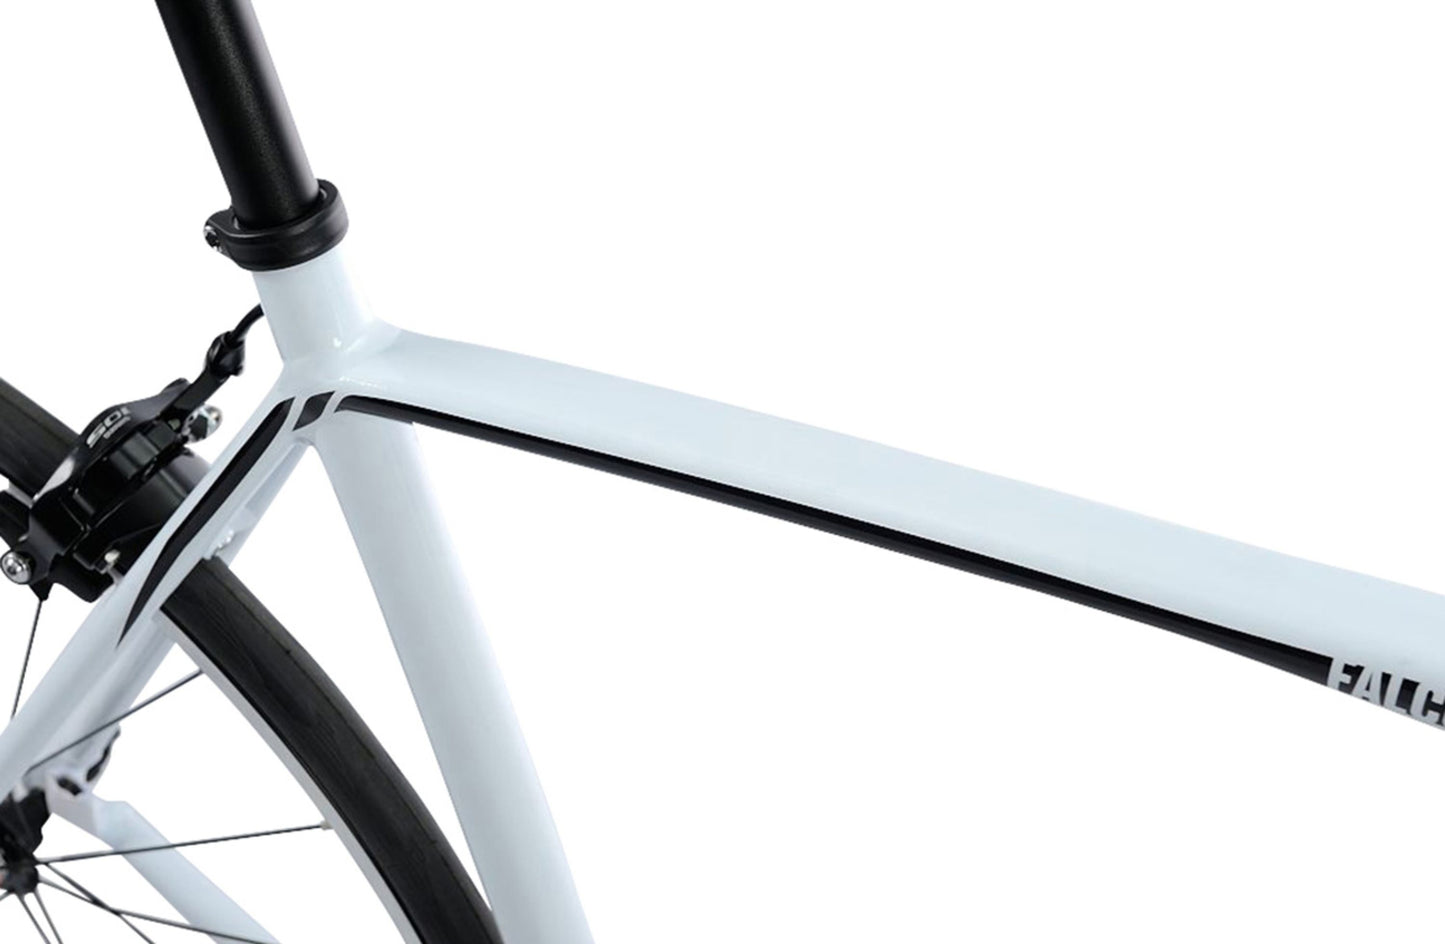 Falco Elite Road Bike in White showing lightweight road geometry bike frame from Reid Cycles Australia